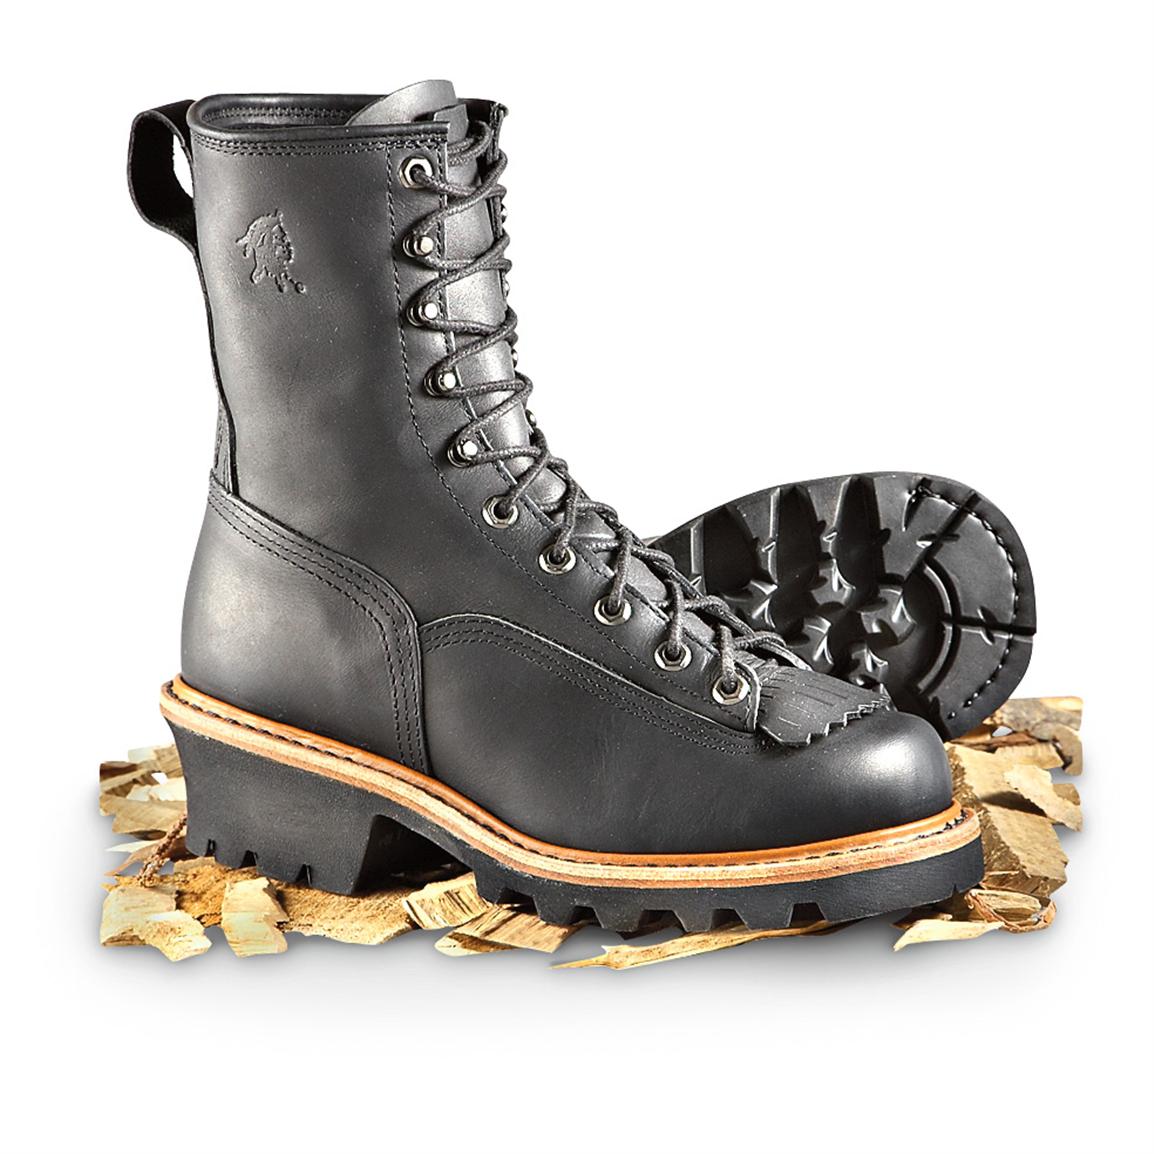 Toe Logger Boots, Black - 227948, Work 